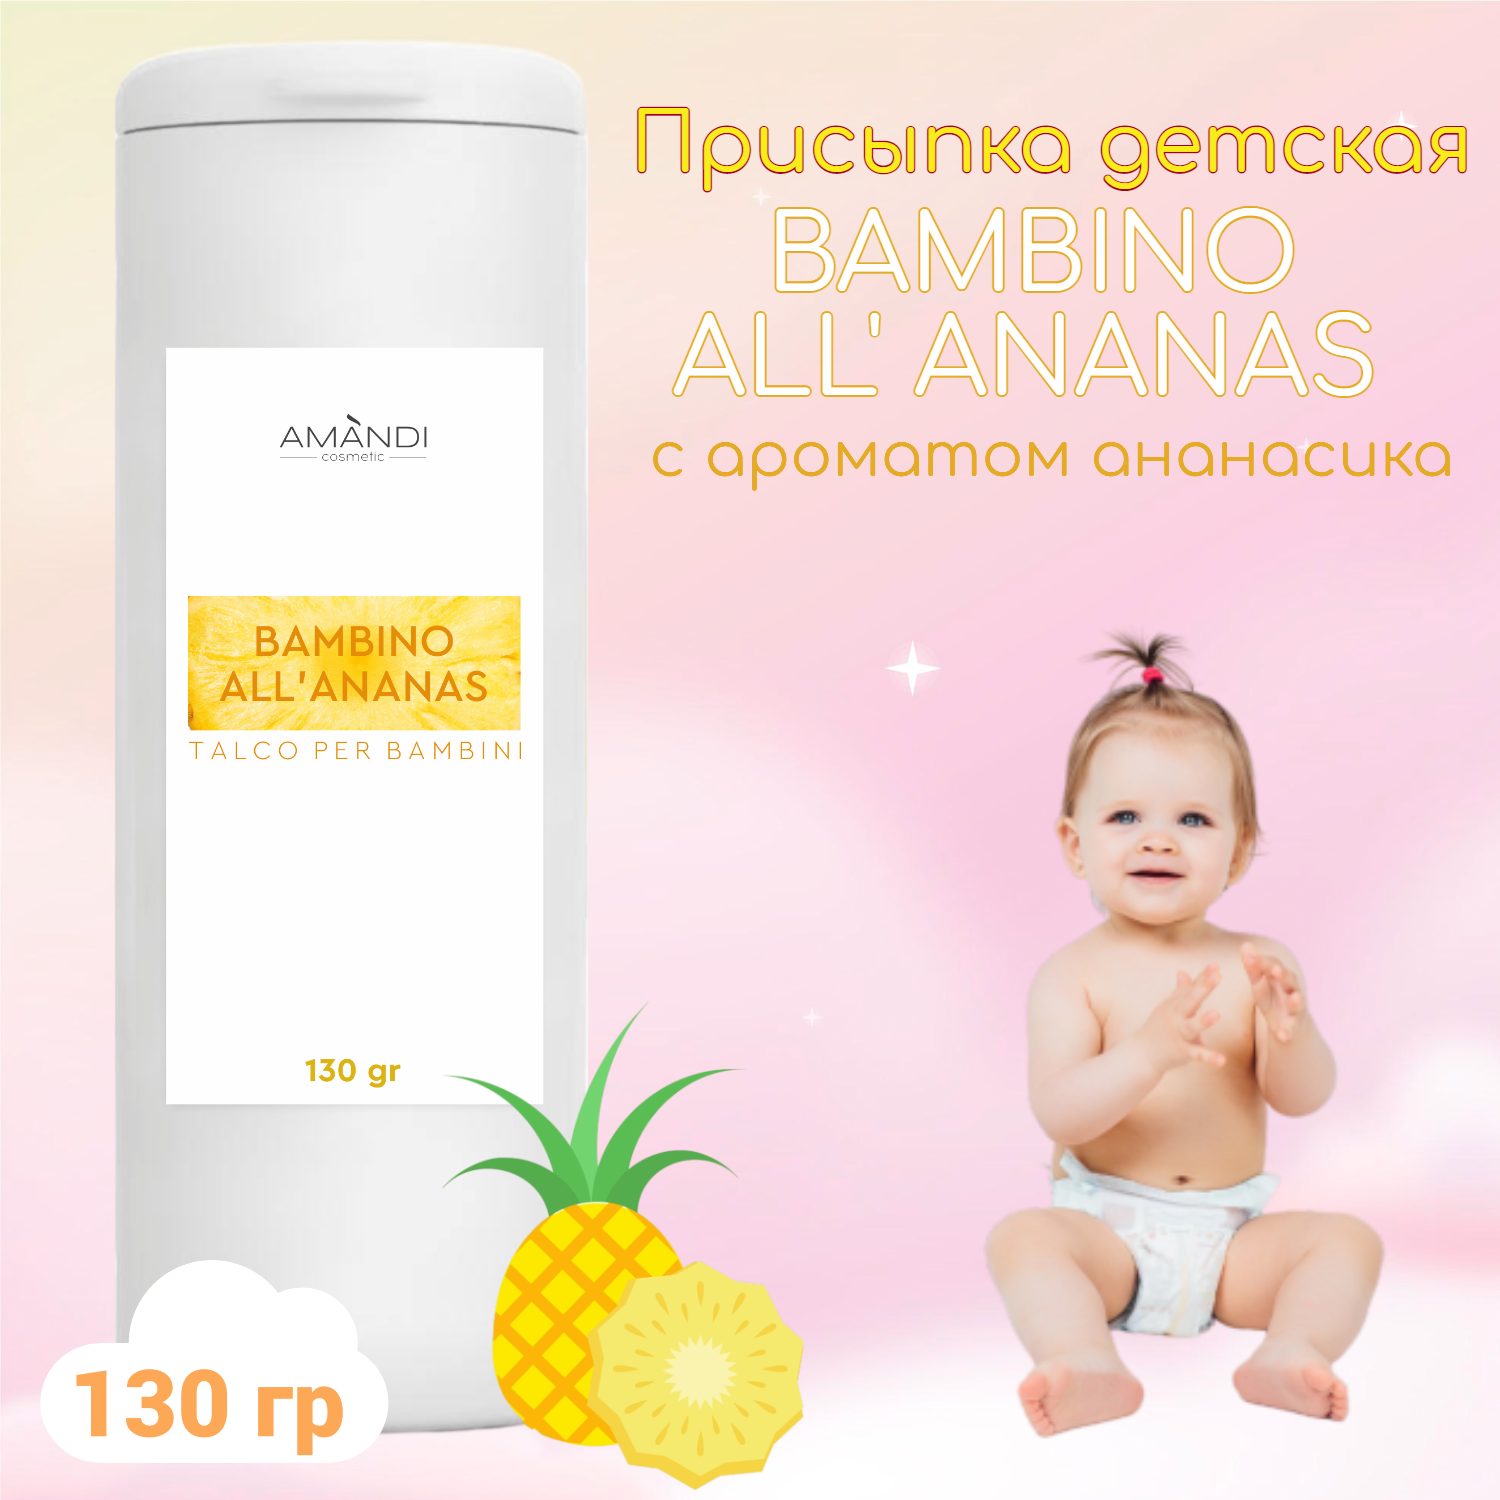 Присыпка детская AMANDI BAMBINO ALL ANANAS с ароматом ананаса 130 грамм - фото 2